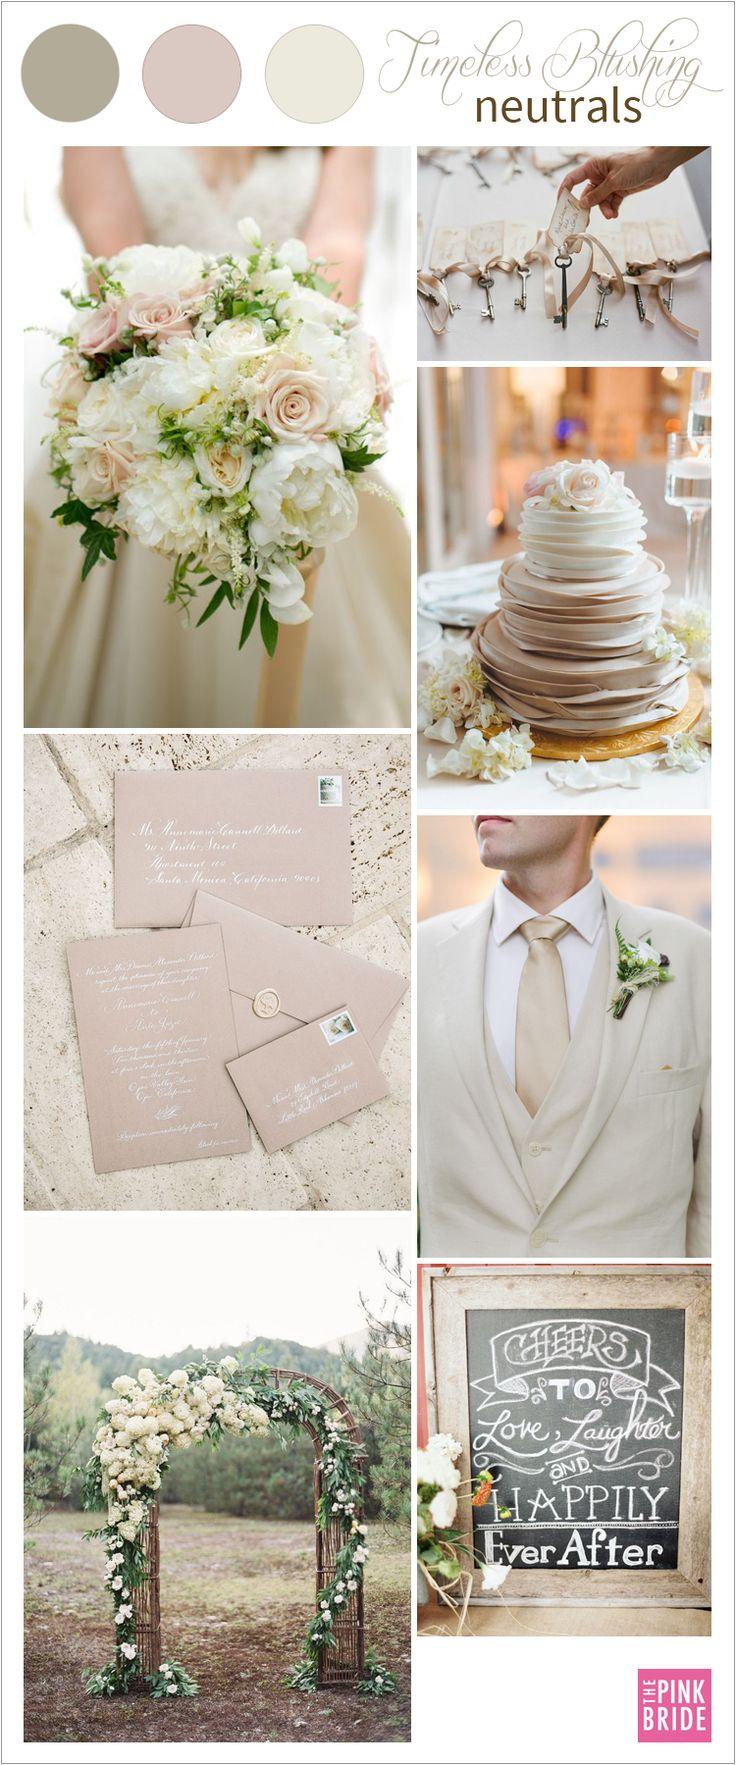 Wedding - Wedding Color Board: Timeless Blushing Neutrals